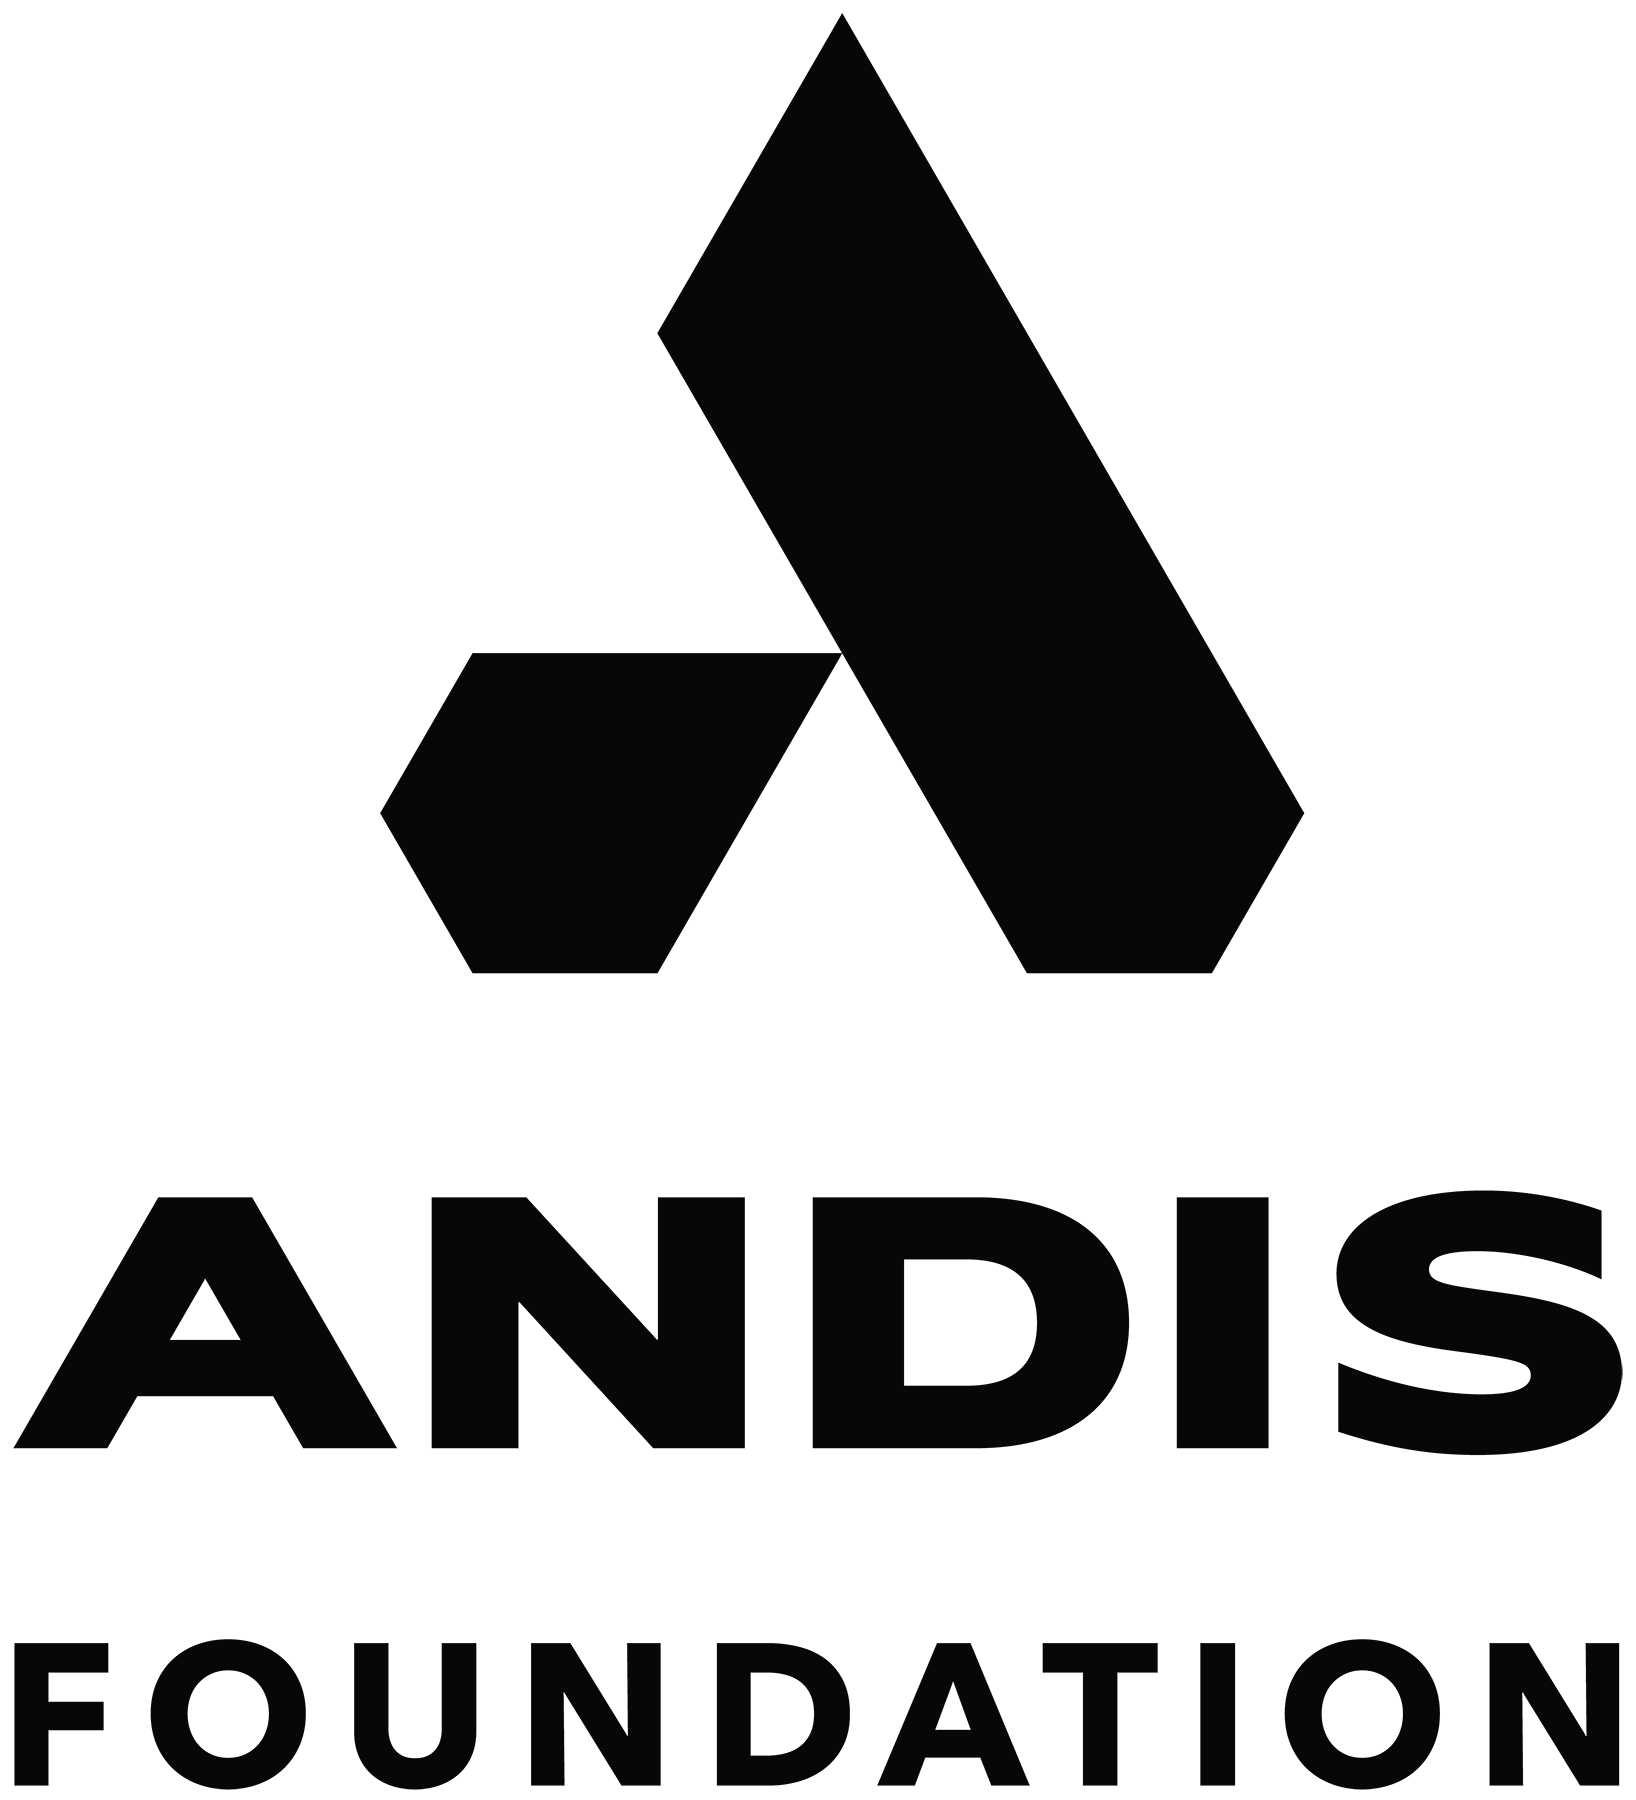 Andis Foundation logo